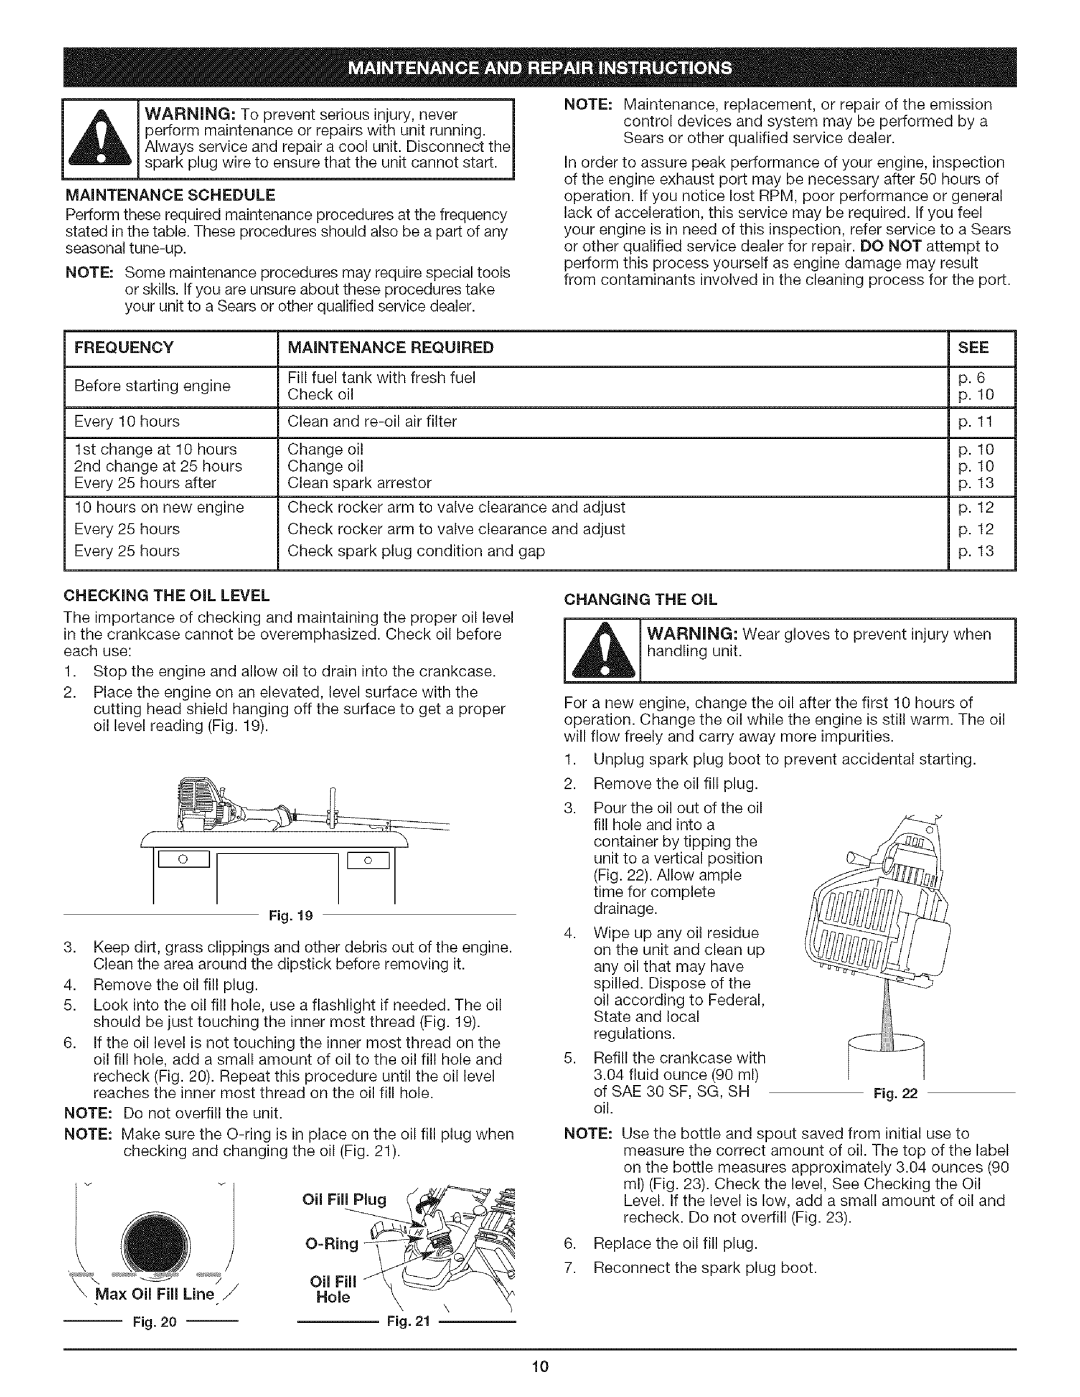 Craftsman 316.79197 manual MaxOilFi,Li,,J/ Hole, Maintenance Schedule, CHECKING THE OiL LEVEL 